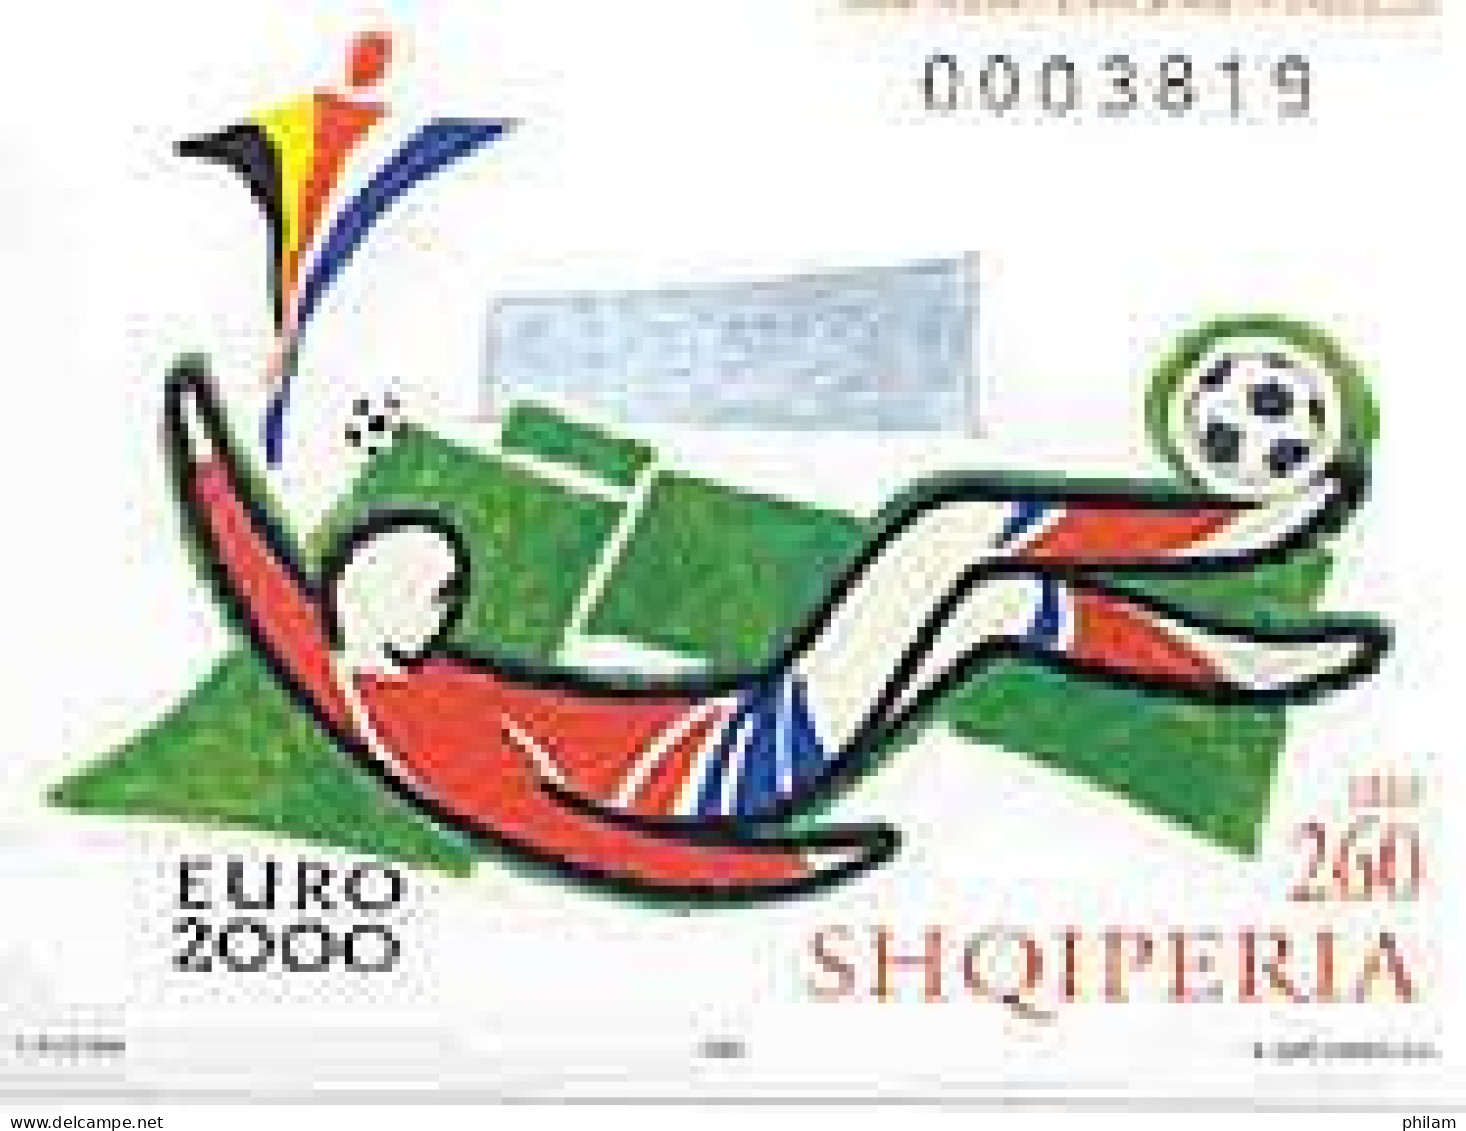 ALBANIE 2000 - Euro 2000 - Coupe D'Europe De Football - BF - Europei Di Calcio (UEFA)